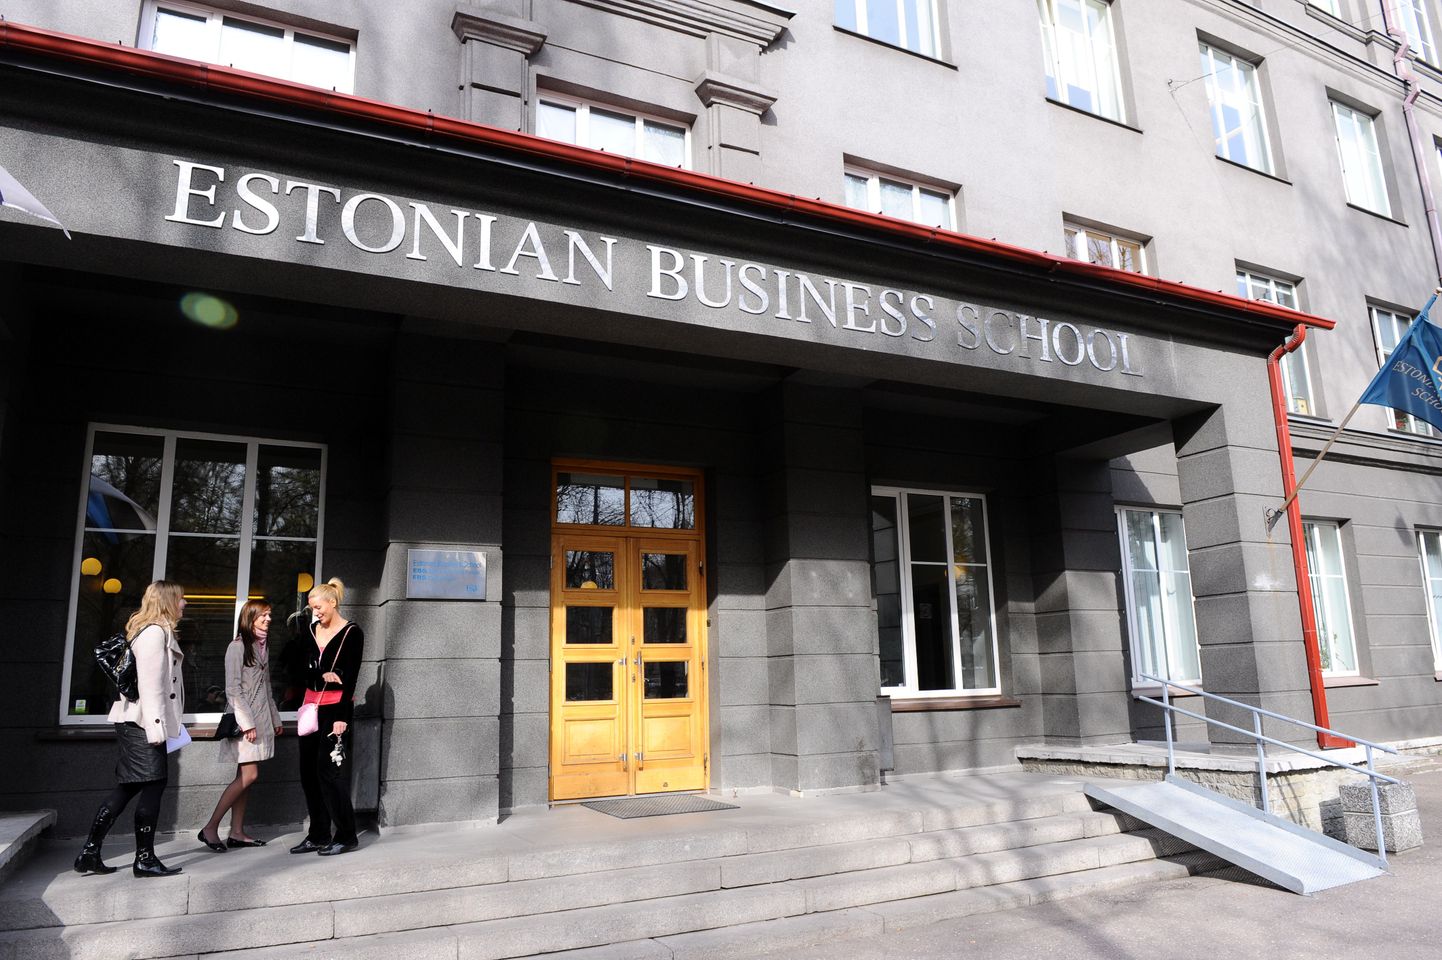 Estonian Business School.